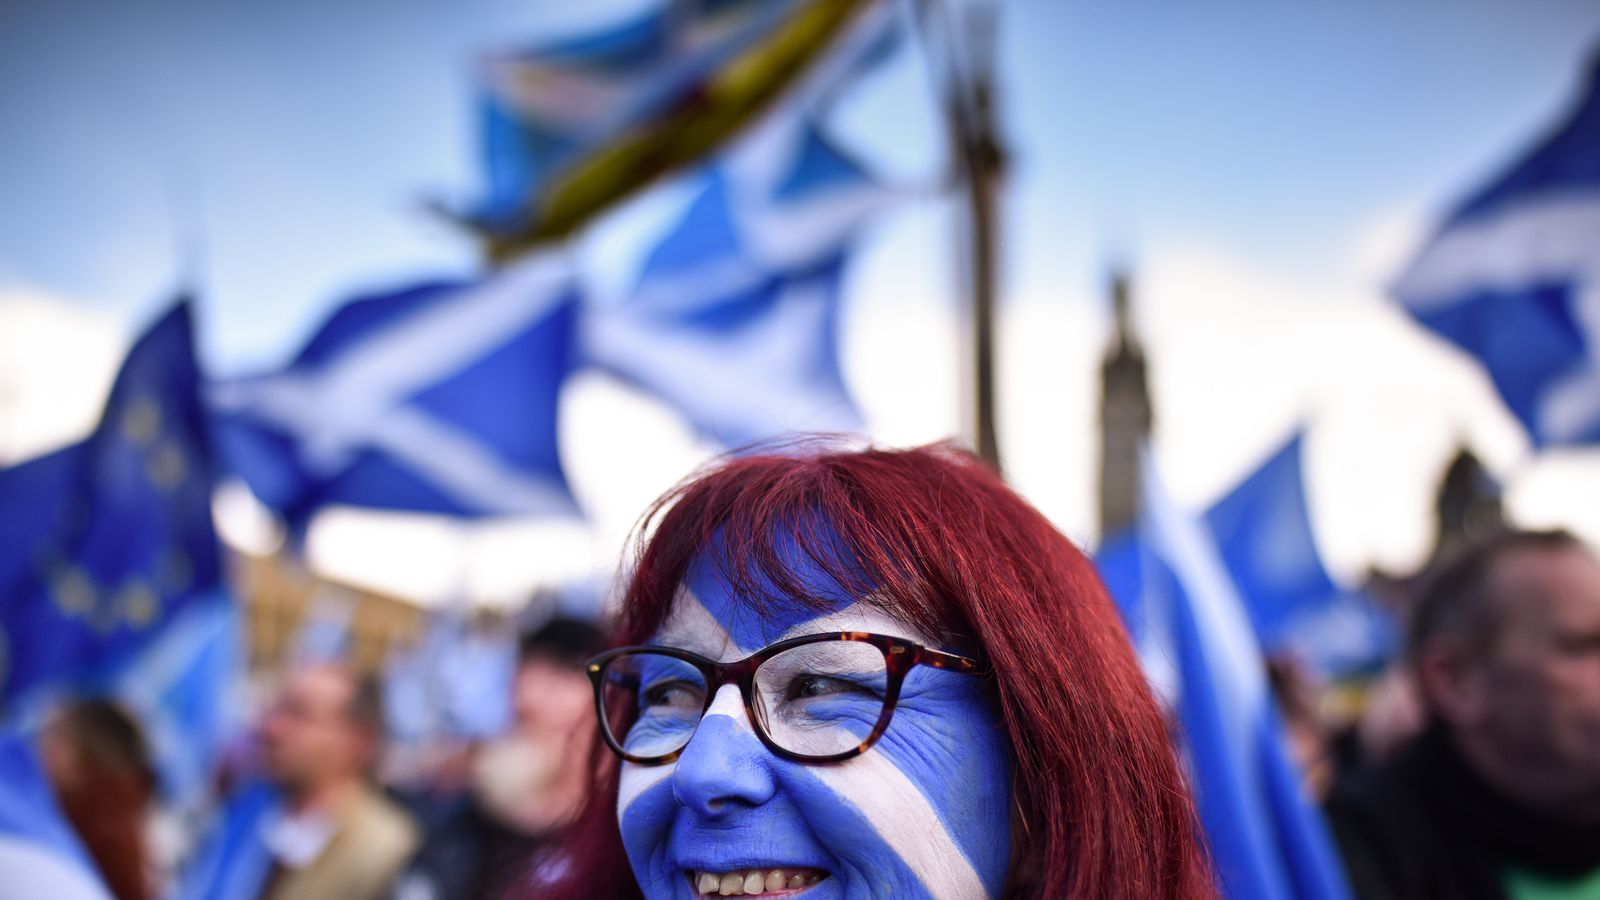 IndyRef2: Second Scottish independence referendum needs Westminster's approval, Supreme Court rules